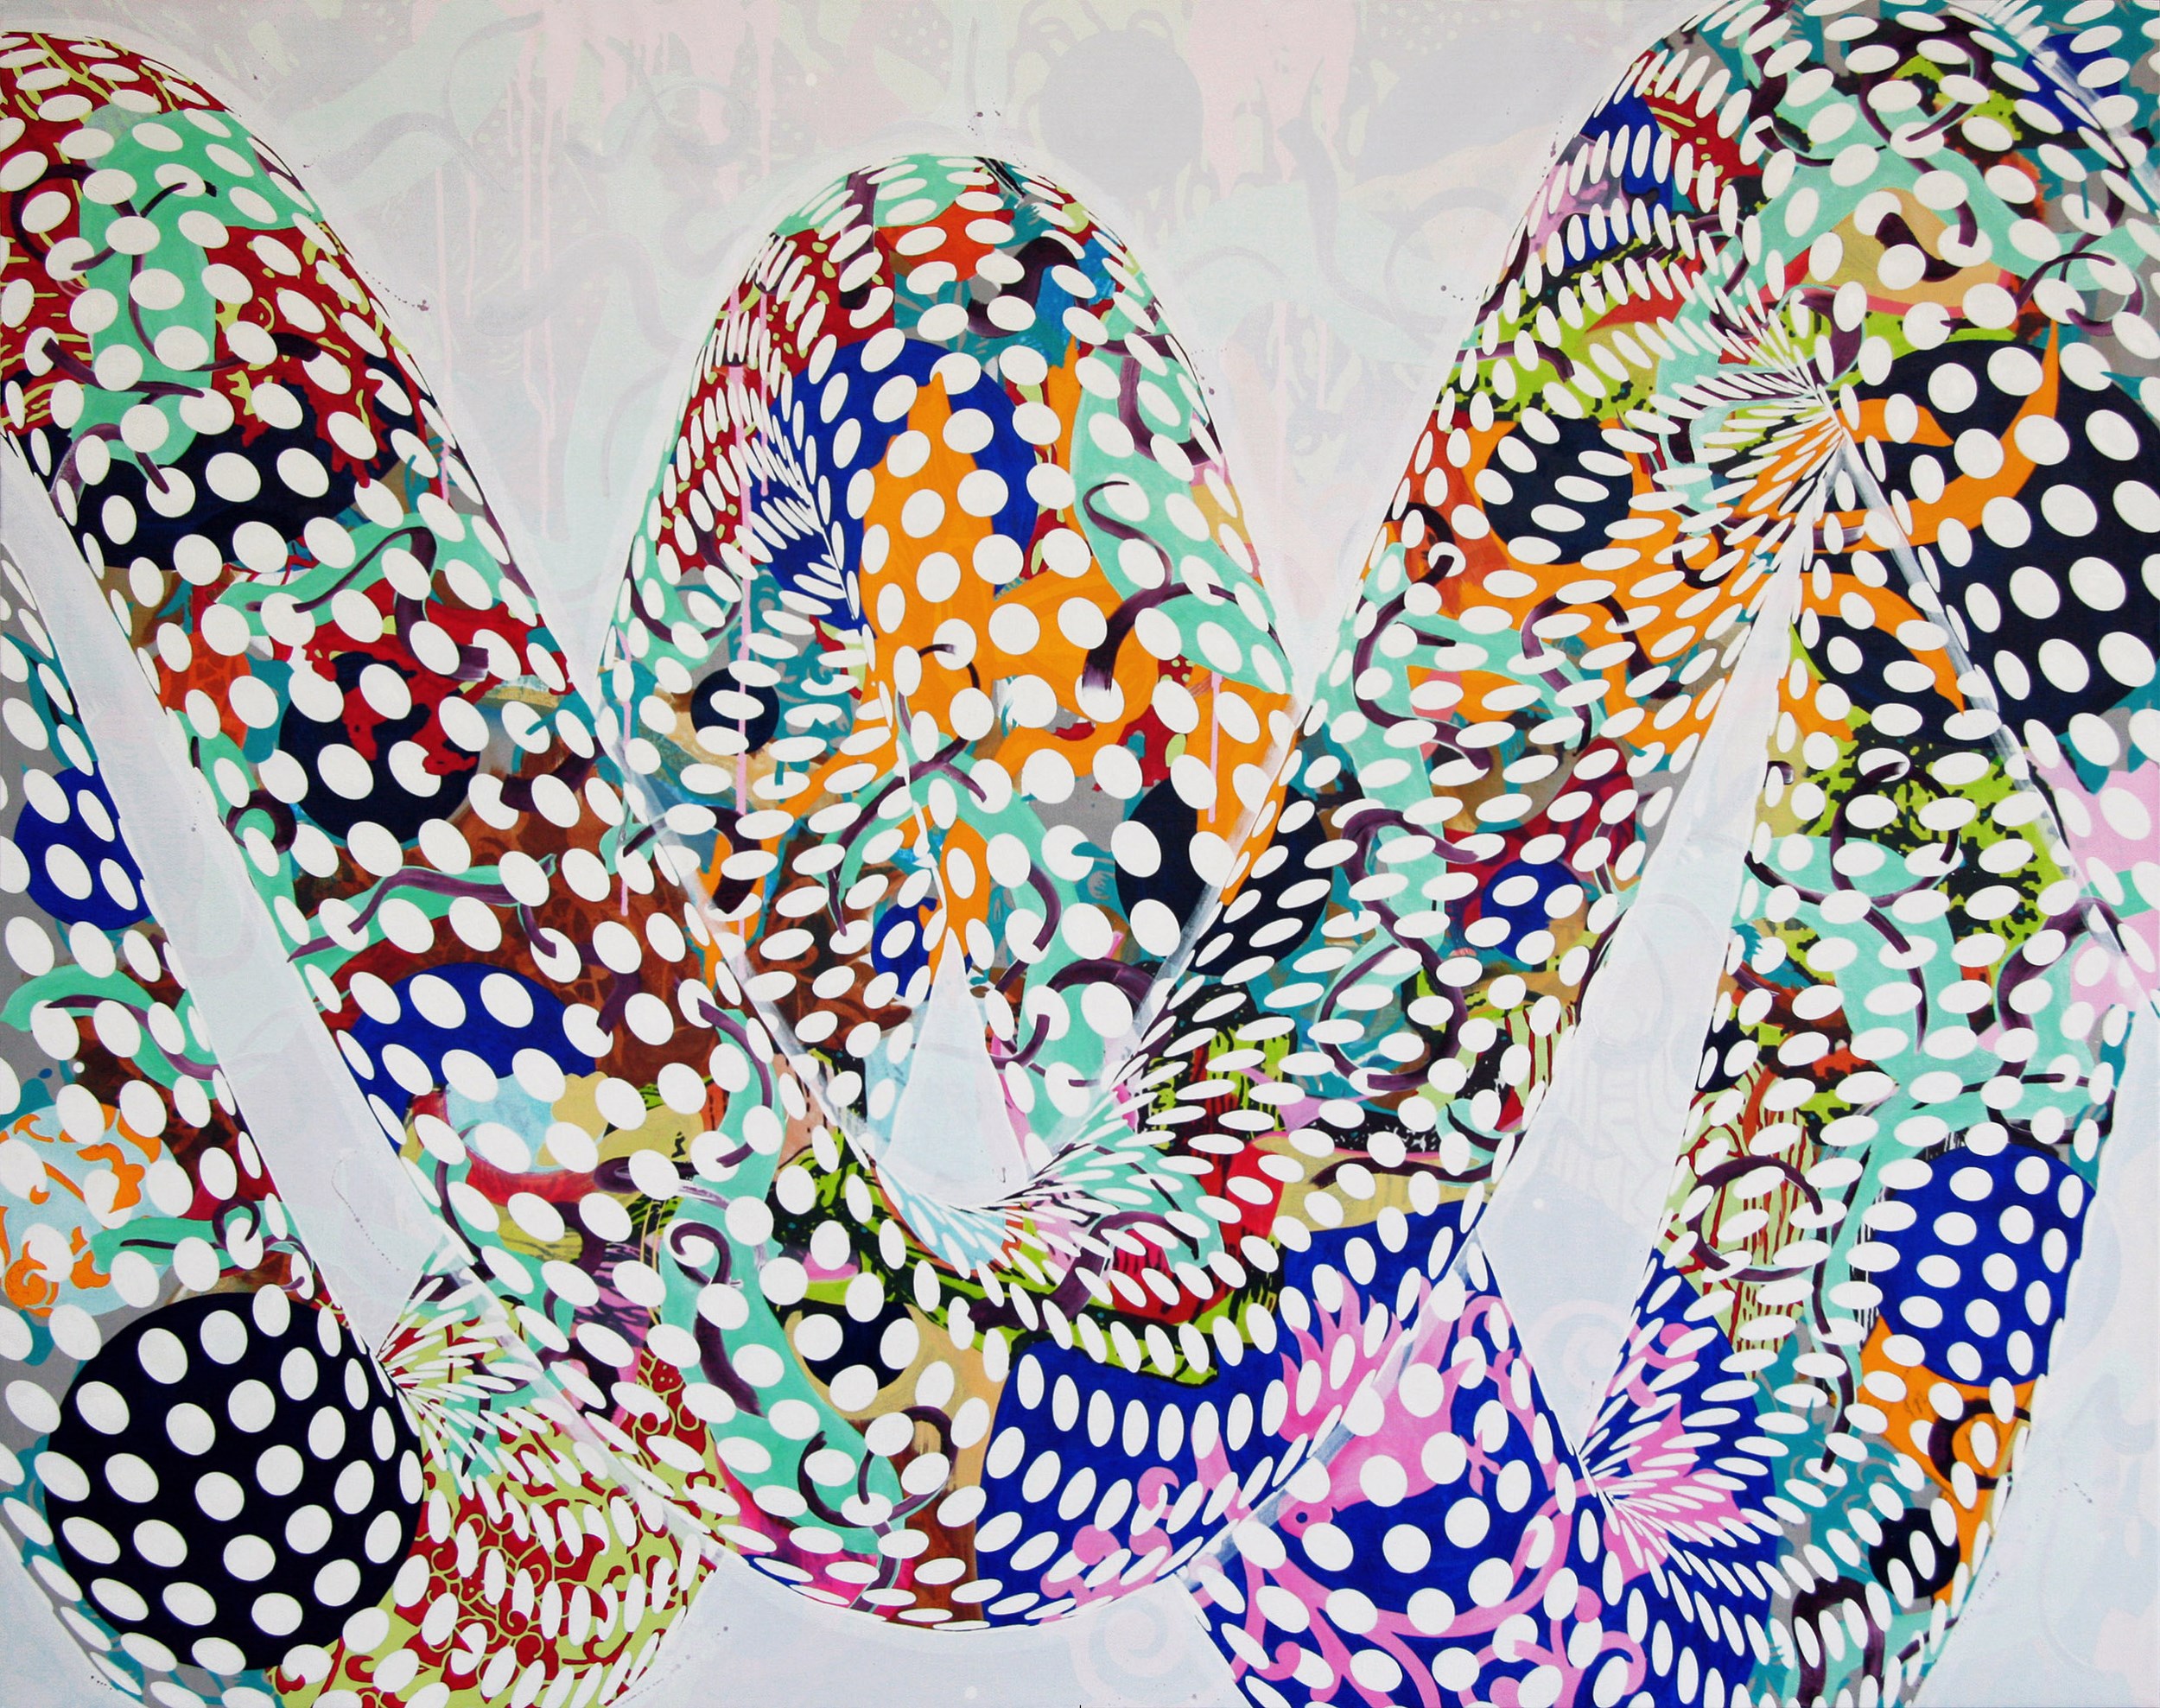 Loop #01, 2012, oil and acrylic on canvas, 185 x 232 cm.